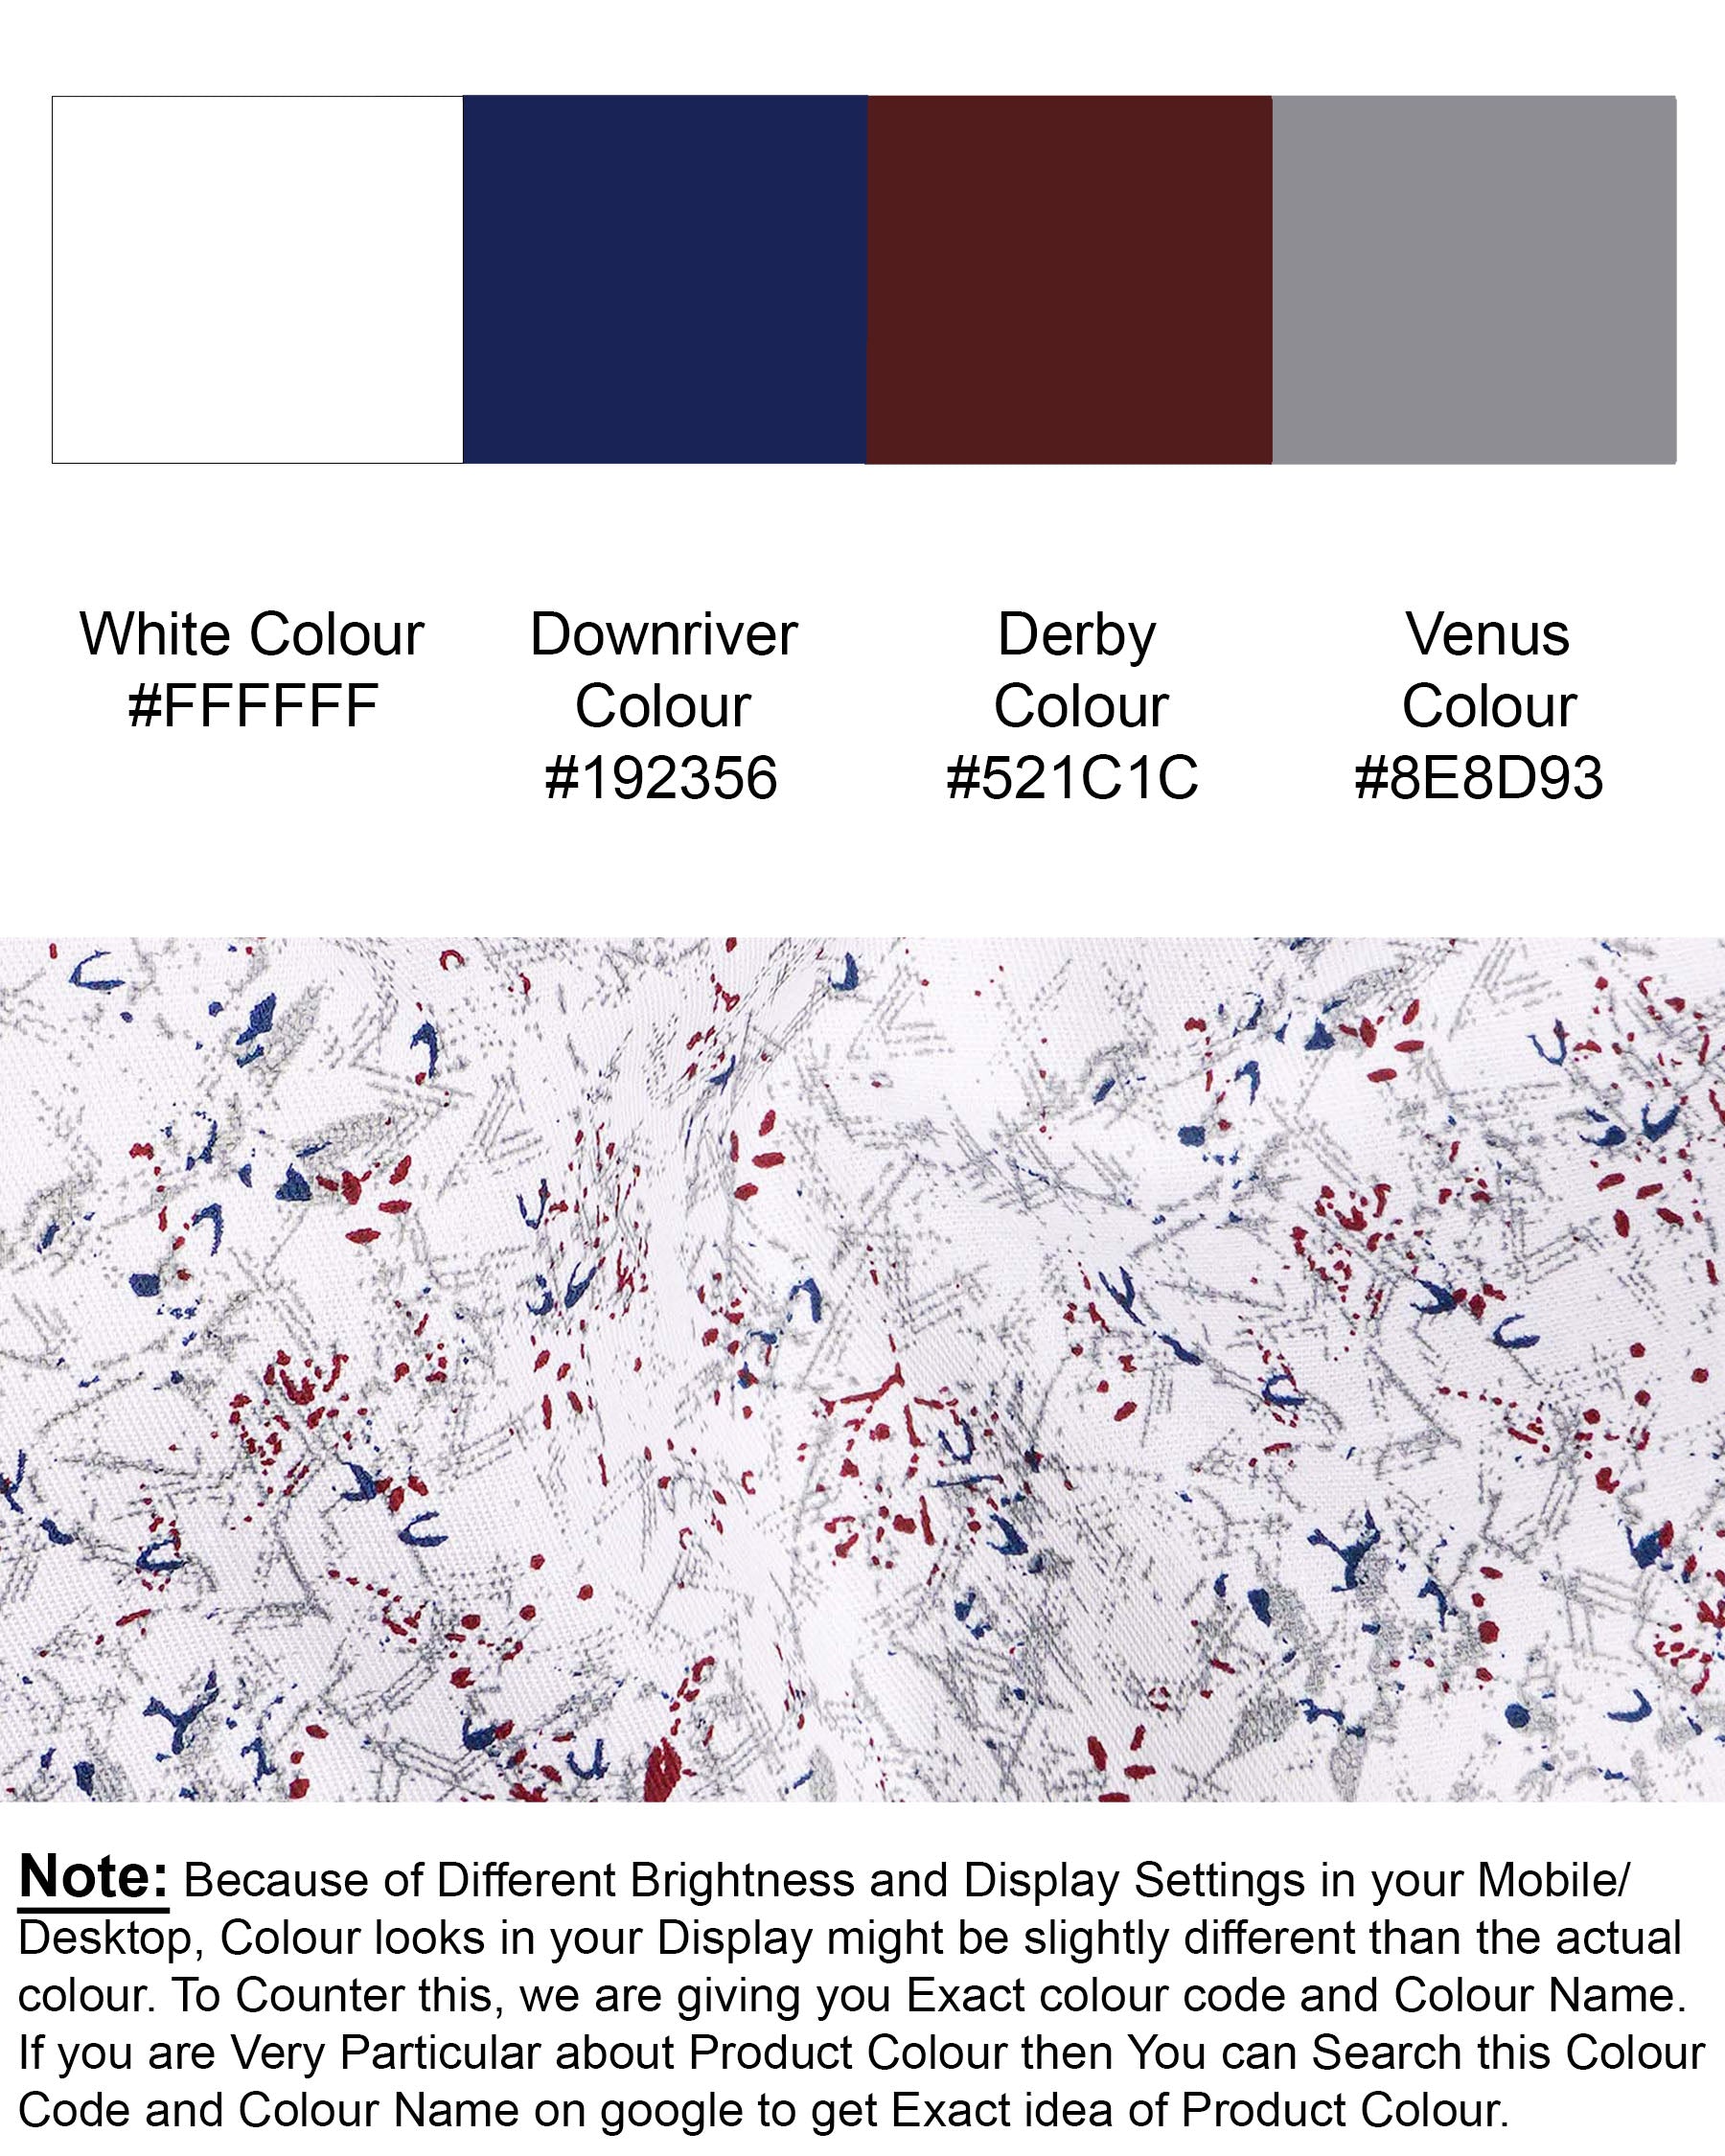 White and Downriver Blue Colour Sprint Printed Twill Premium Cotton Shirt 7560-BLE-38,7560-BLE-38,7560-BLE-39,7560-BLE-39,7560-BLE-40,7560-BLE-40,7560-BLE-42,7560-BLE-42,7560-BLE-44,7560-BLE-44,7560-BLE-46,7560-BLE-46,7560-BLE-48,7560-BLE-48,7560-BLE-50,7560-BLE-50,7560-BLE-52,7560-BLE-52